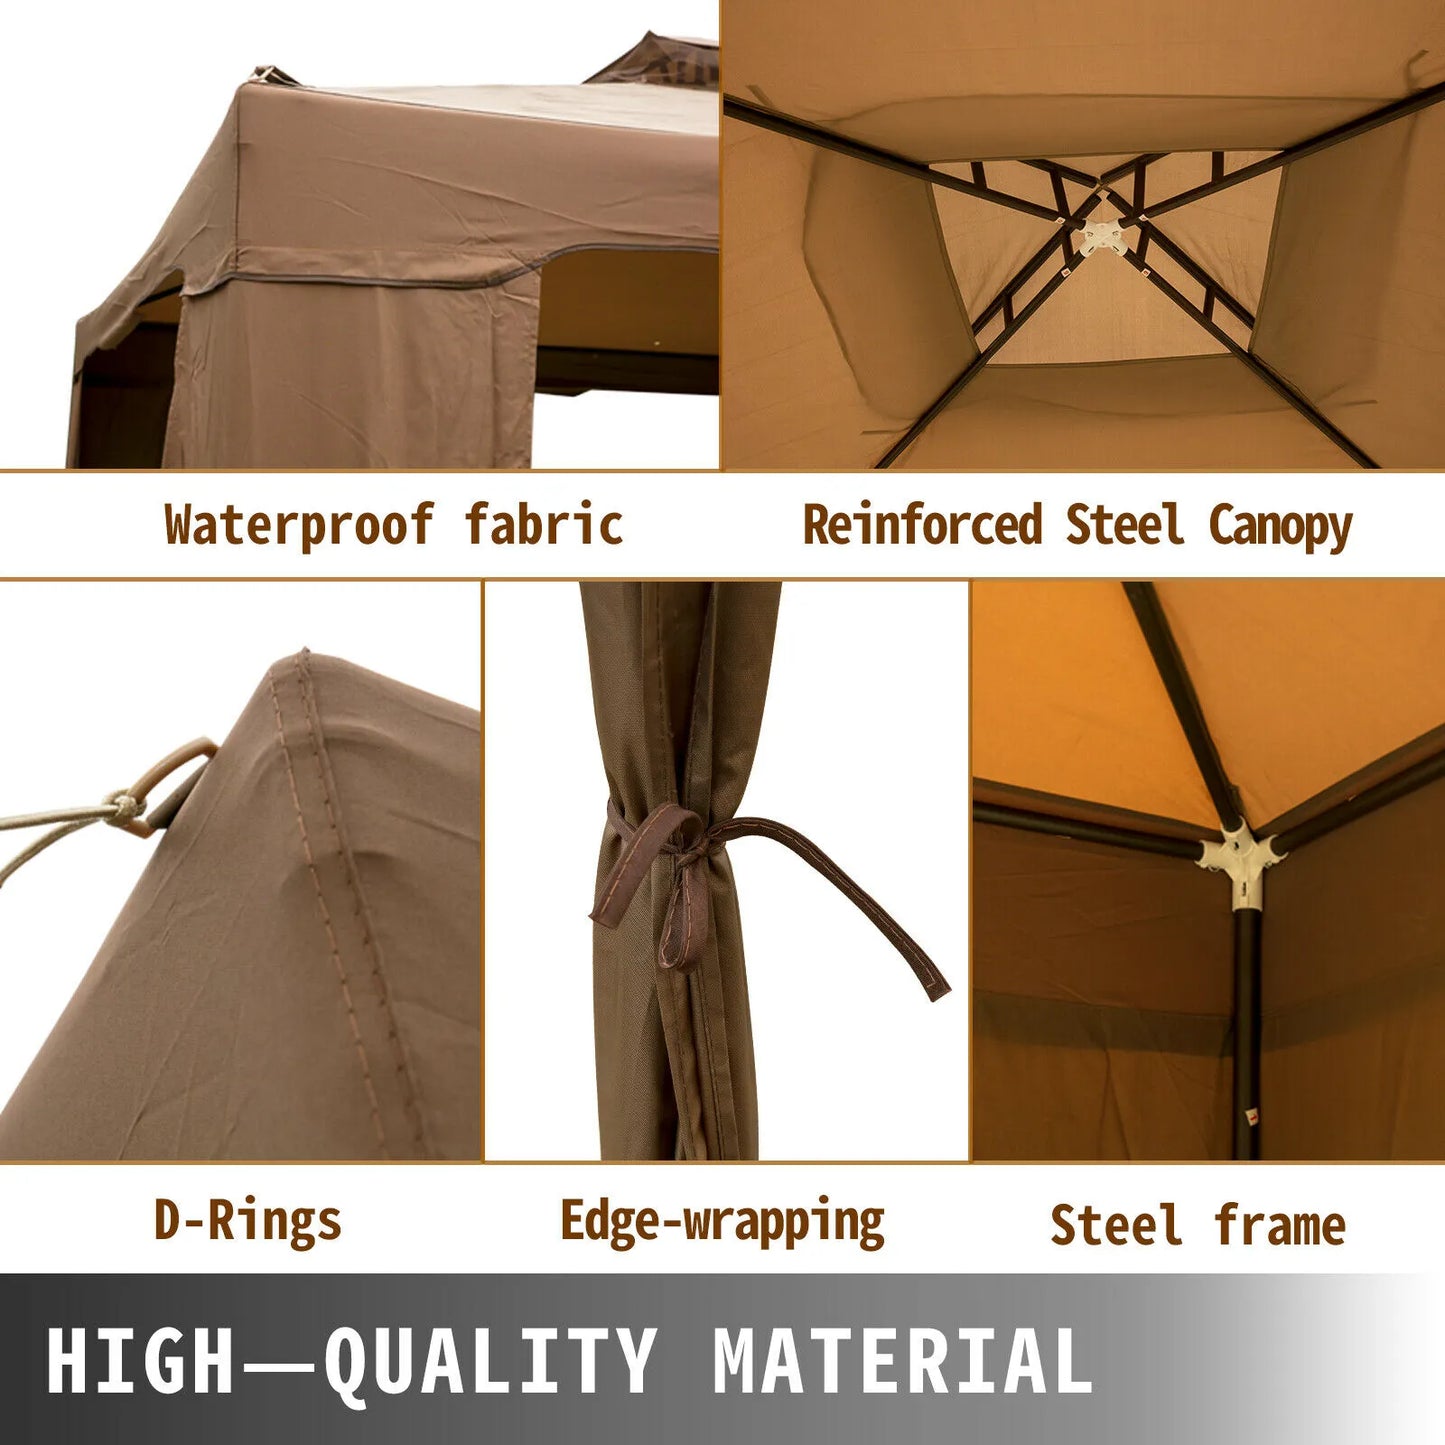 Gazebo Canopy Tent W/Netting Sandbag